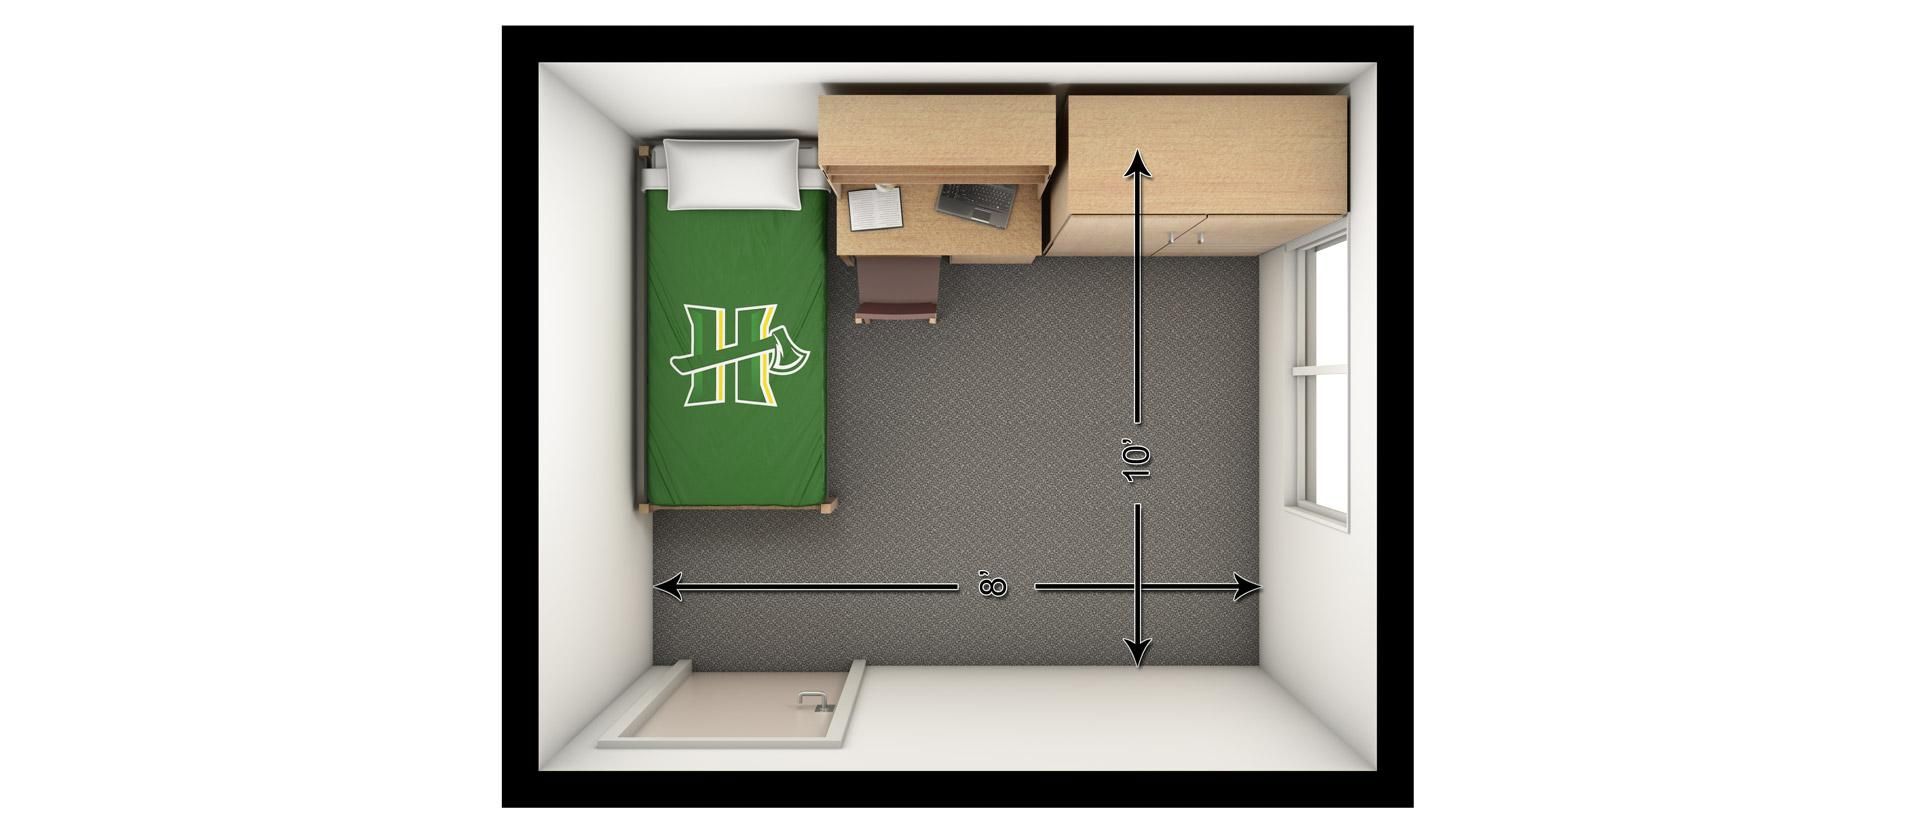 Cypress Single Room Floor Plan